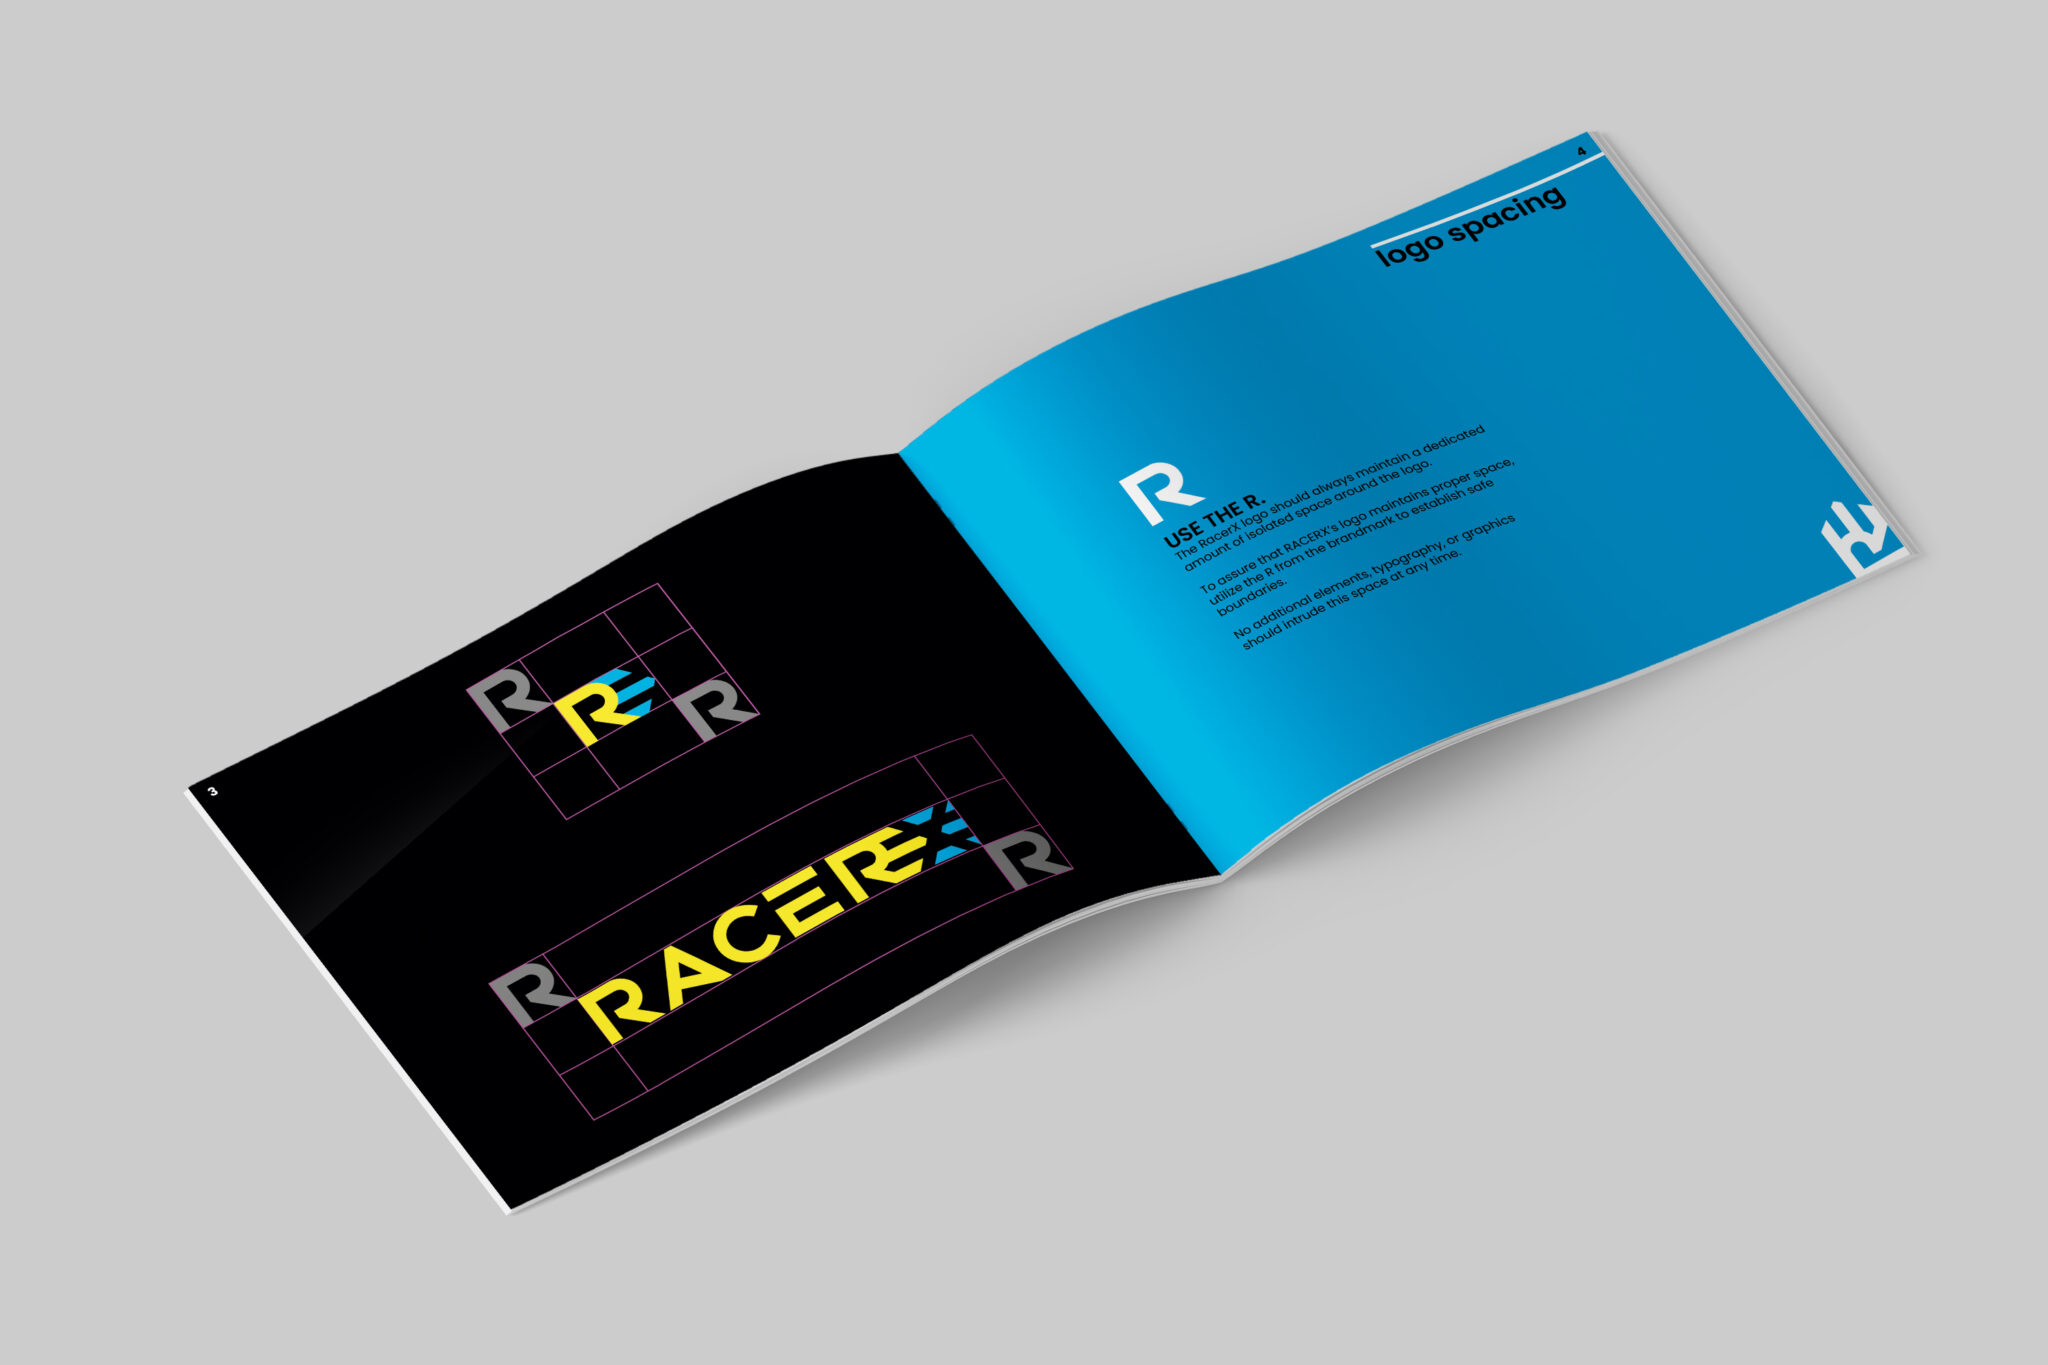 RacerX Project